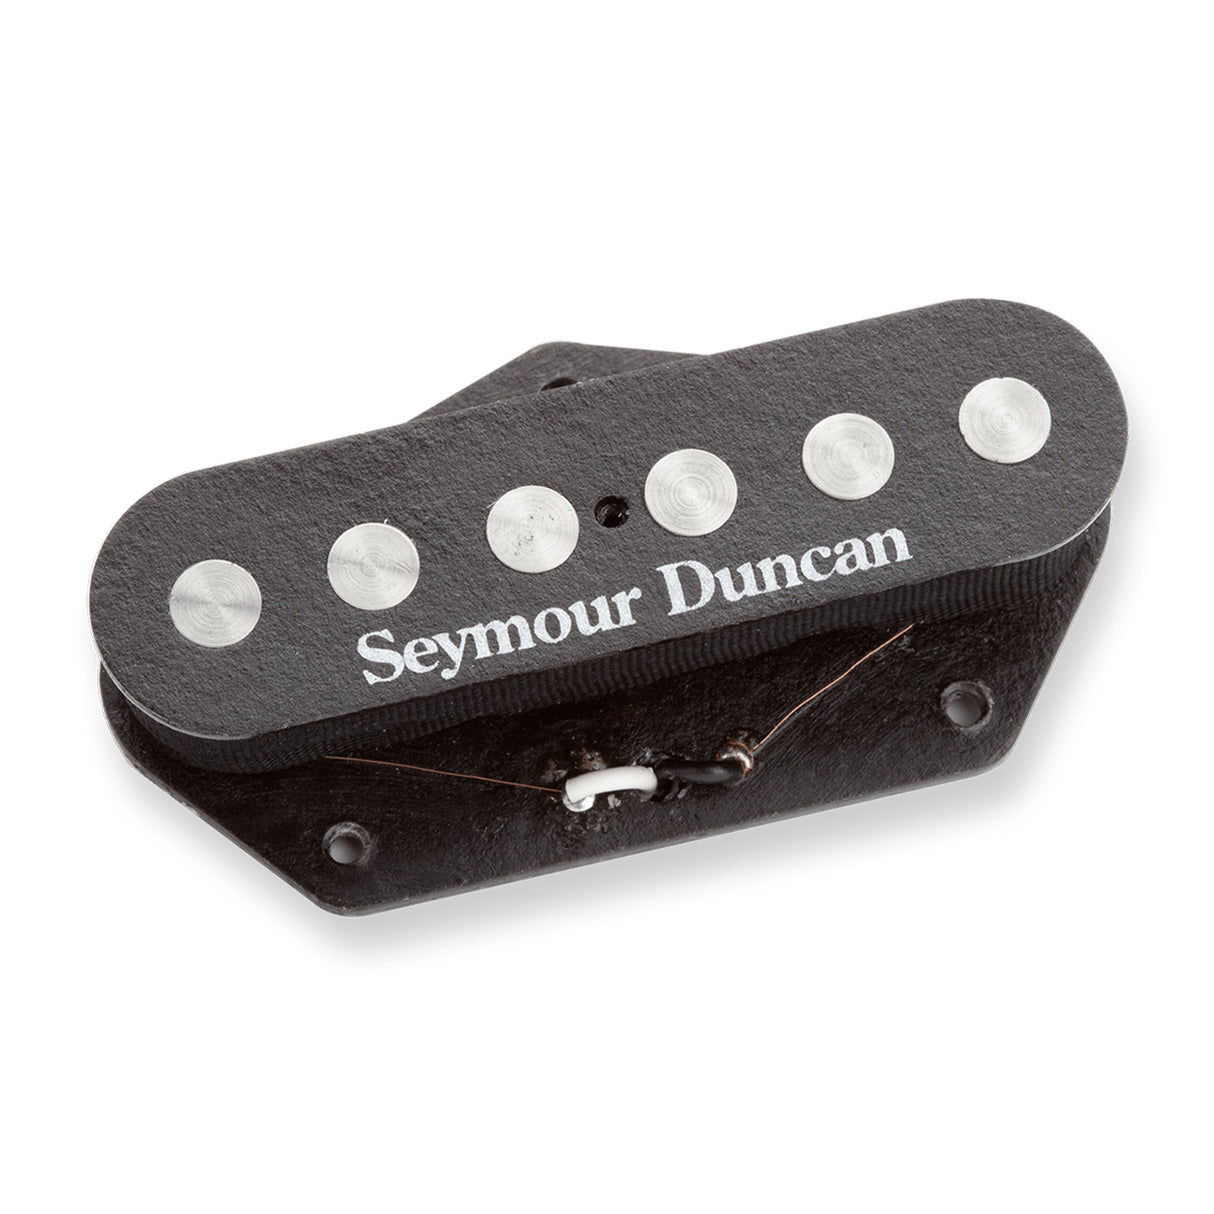 Seymour Duncan 11202-14 Quarter Pound Tele High-Output Humbucker Bridge Pickup